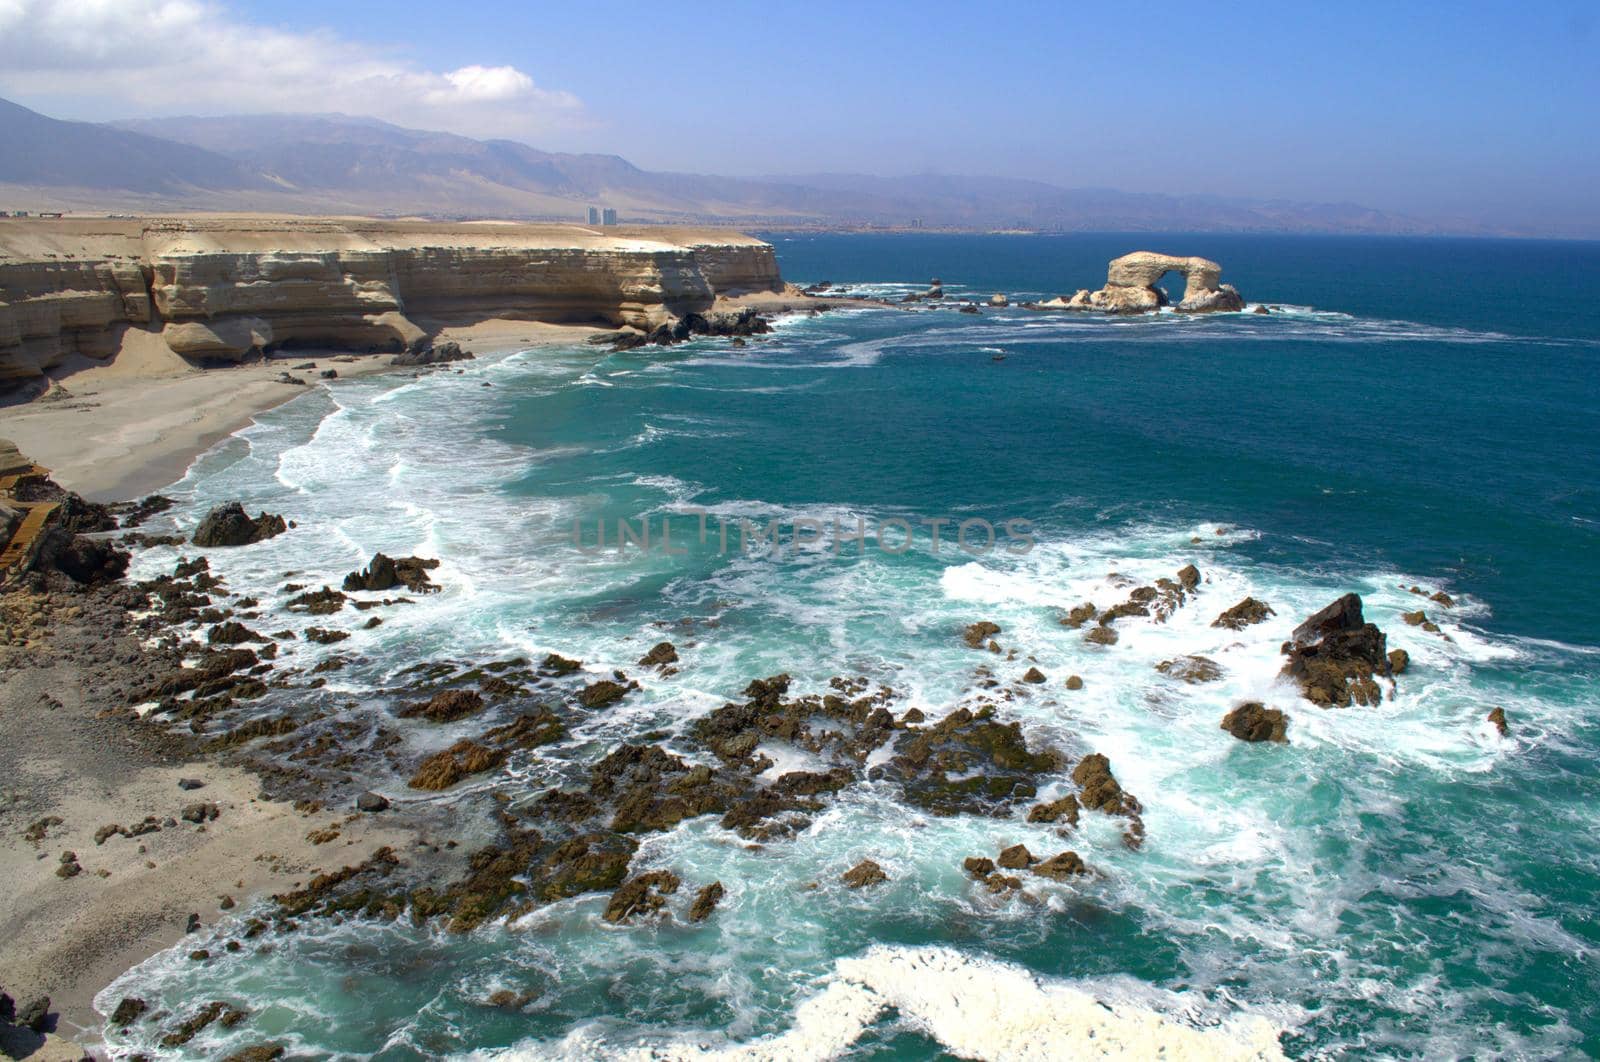 Natural rock formation "La Portada" (The Gate) in Antofagasta, Chile. Wide angle view.